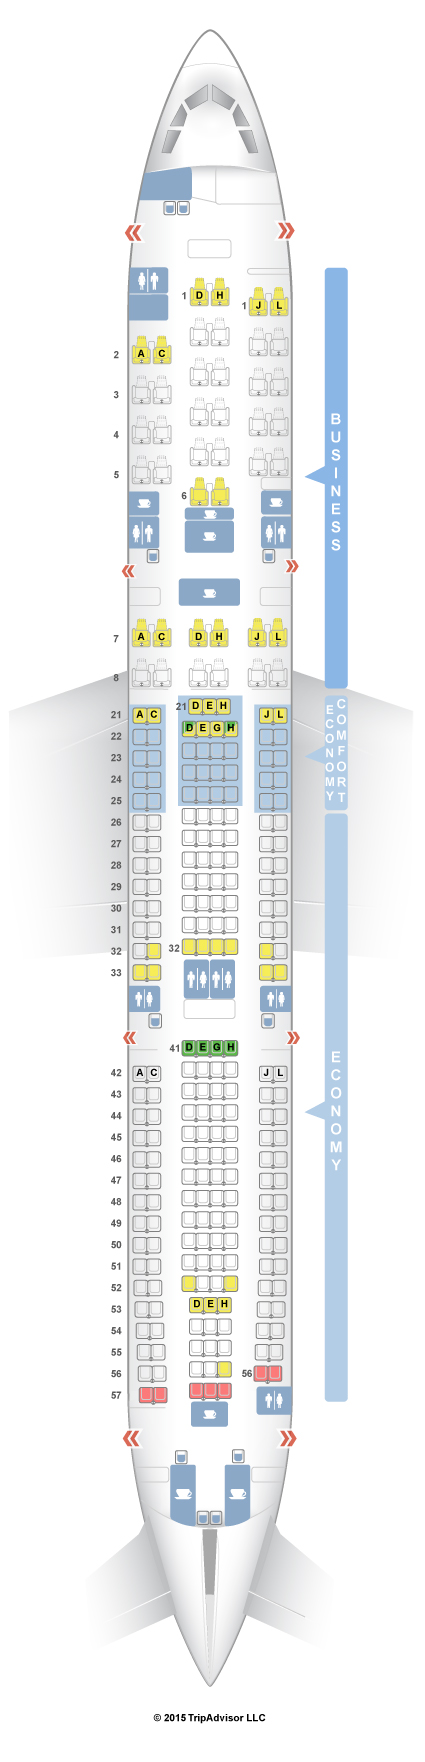 Finnair A350 Seat Map Finnair Airbus A350 900 Seating Plan Seat Plan Images